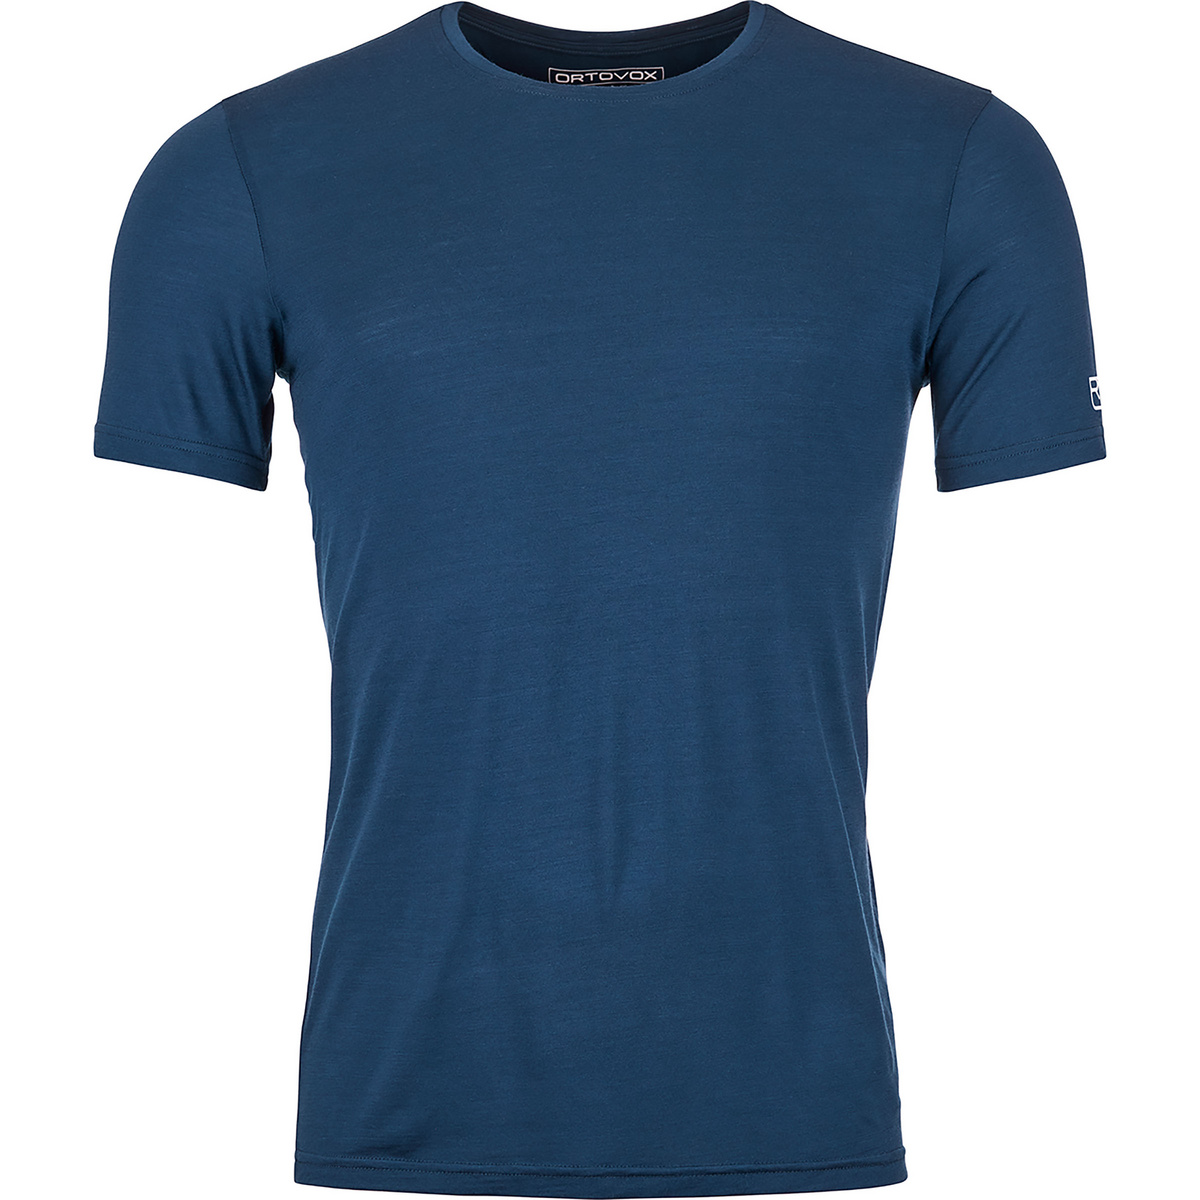 Image of Ortovox Uomo 120 Cool Tec Clean T-Shirt